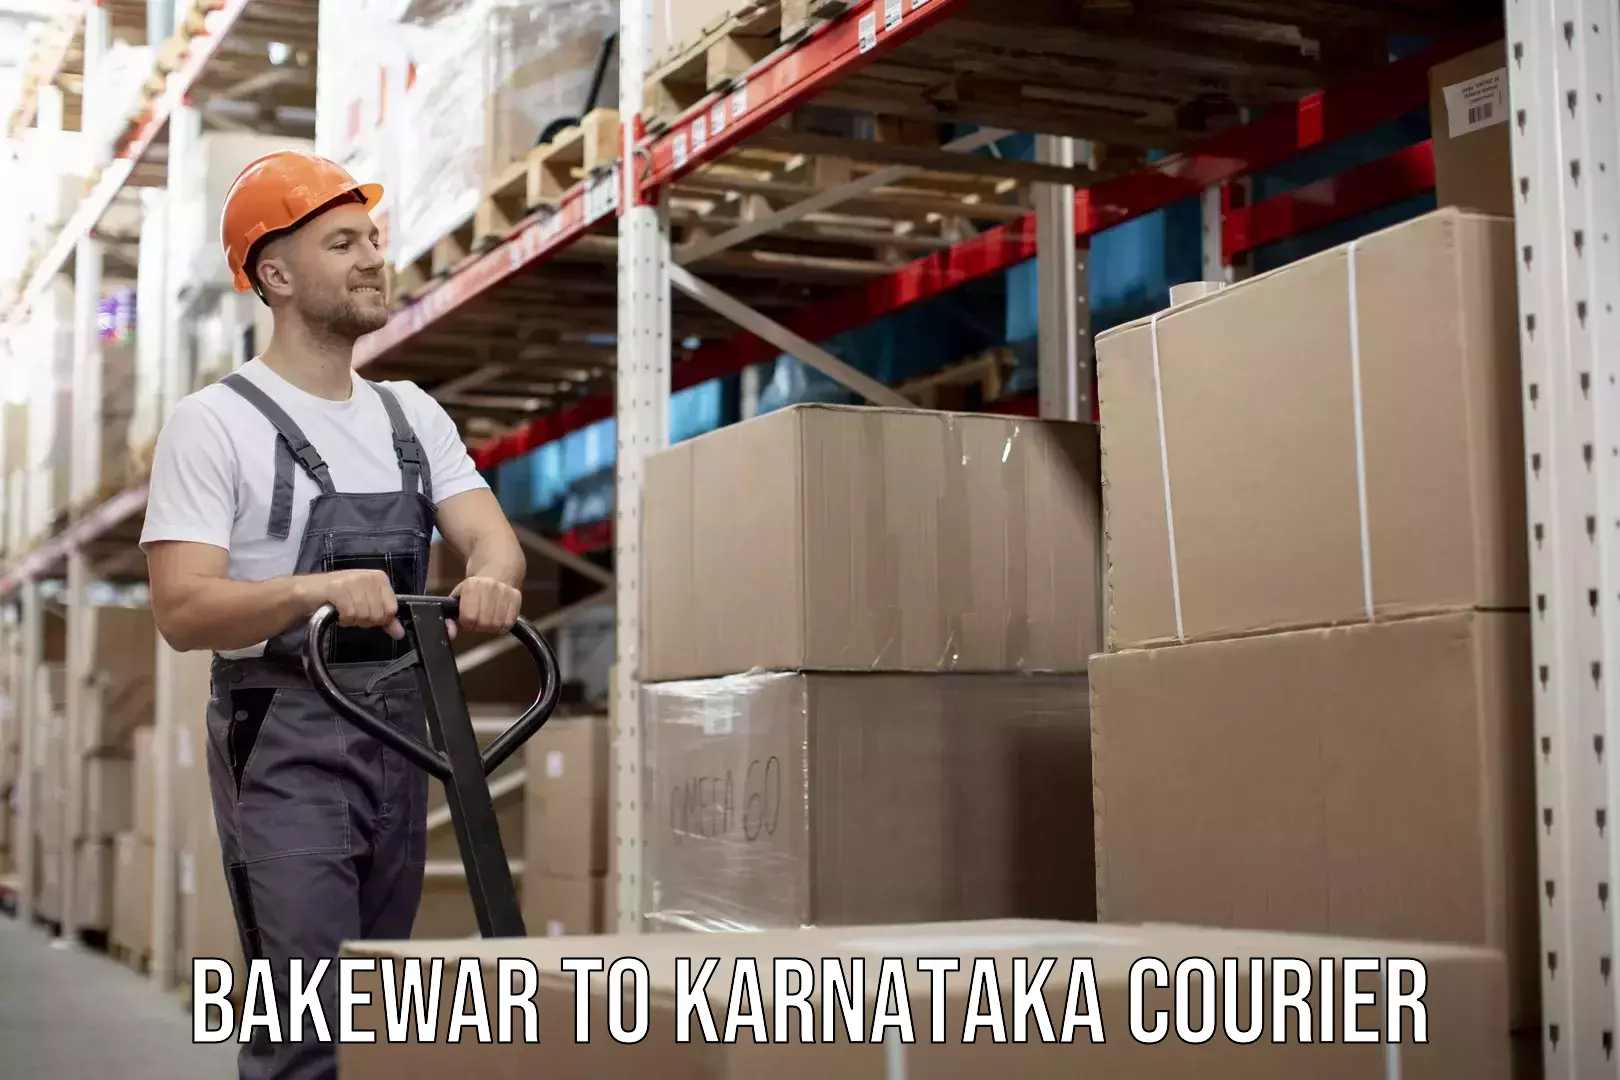 High-speed parcel service Bakewar to Karnataka